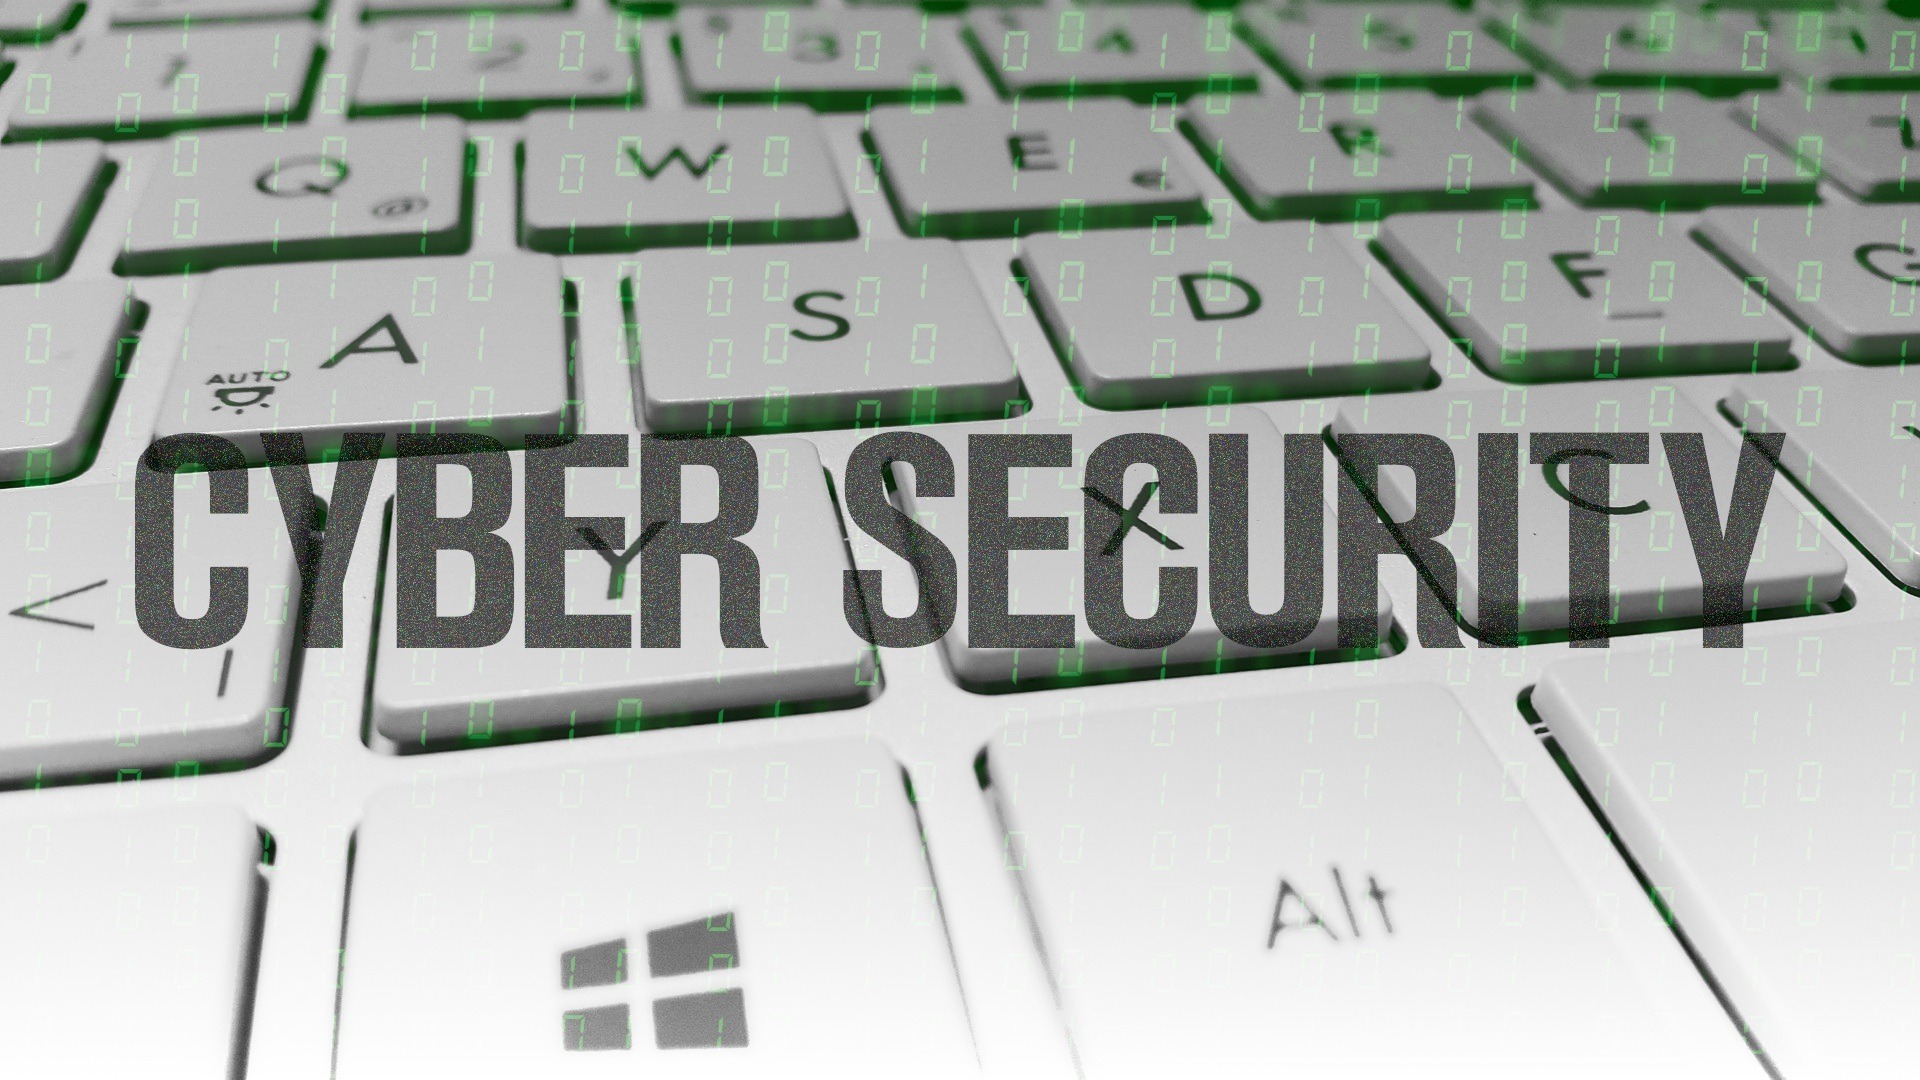 cyber security threats keyboard